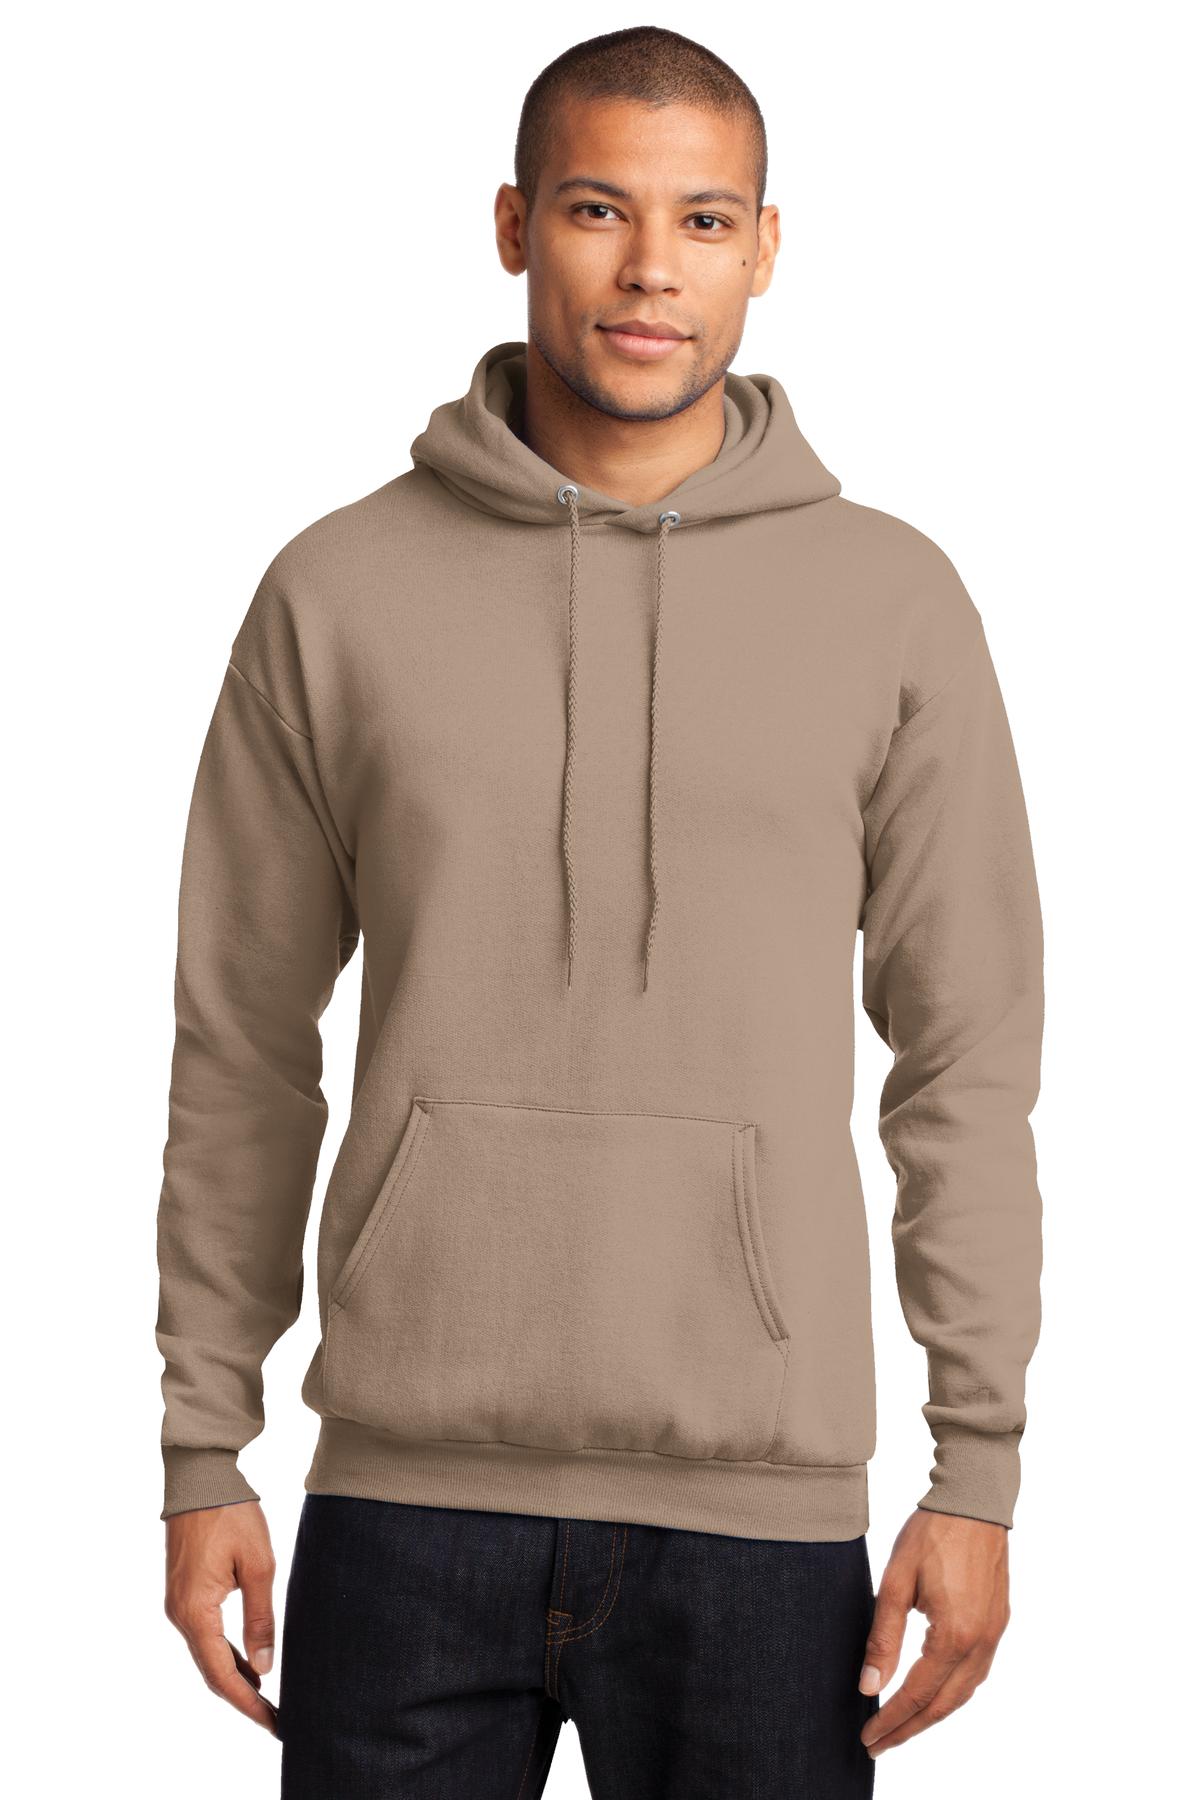 Port & Company® - Core Fleece Pullover Hooded Sweatshirt. PC78H [Sand] - DFW Impression